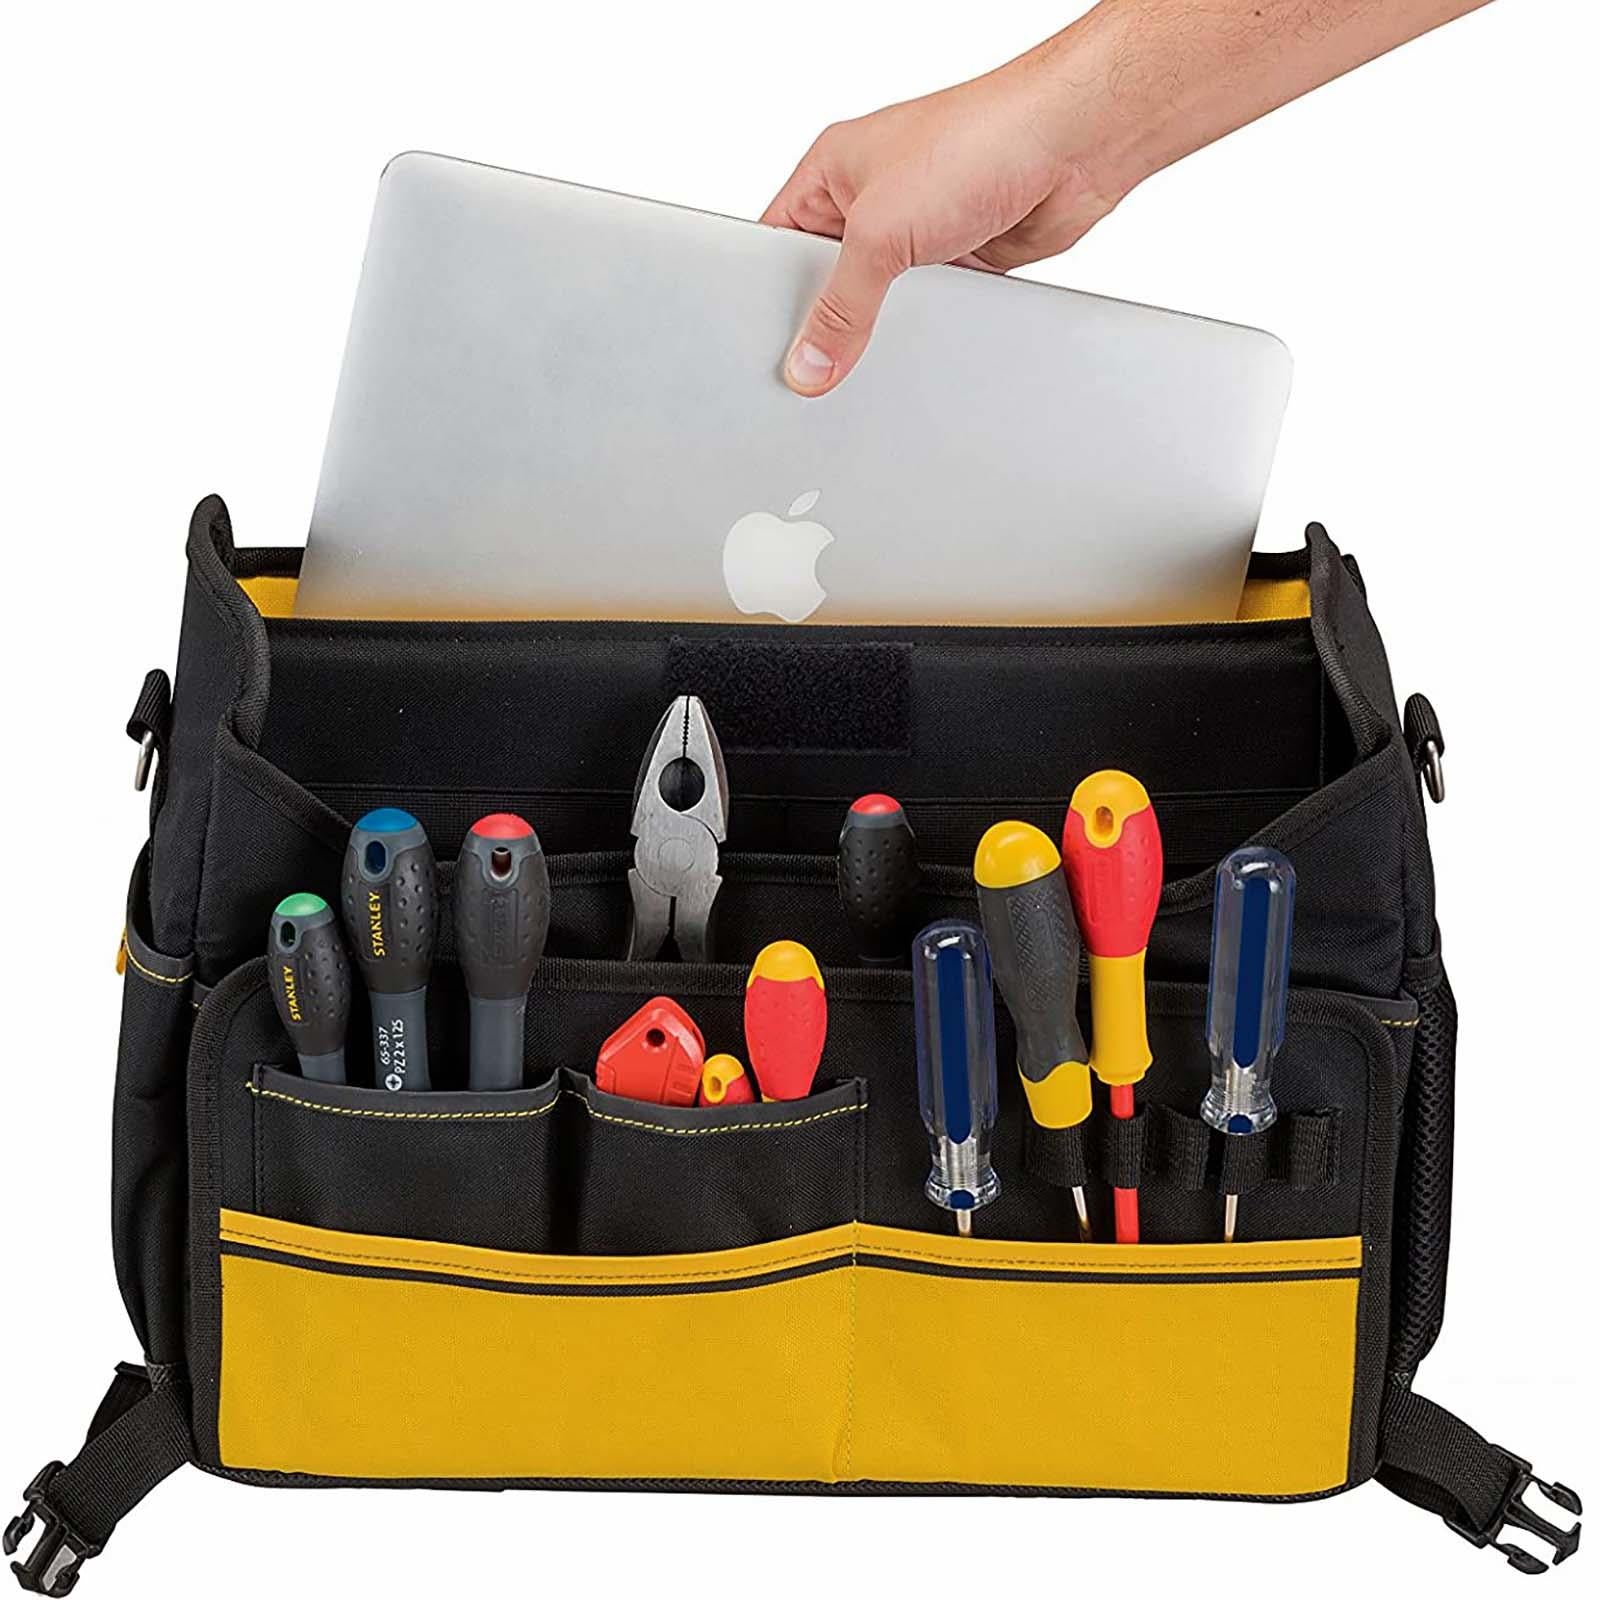 Stanley FatMax Laptop Bag Case Storage Travel Site Water Resistant Bottom Carry Handle Shoulder Strap